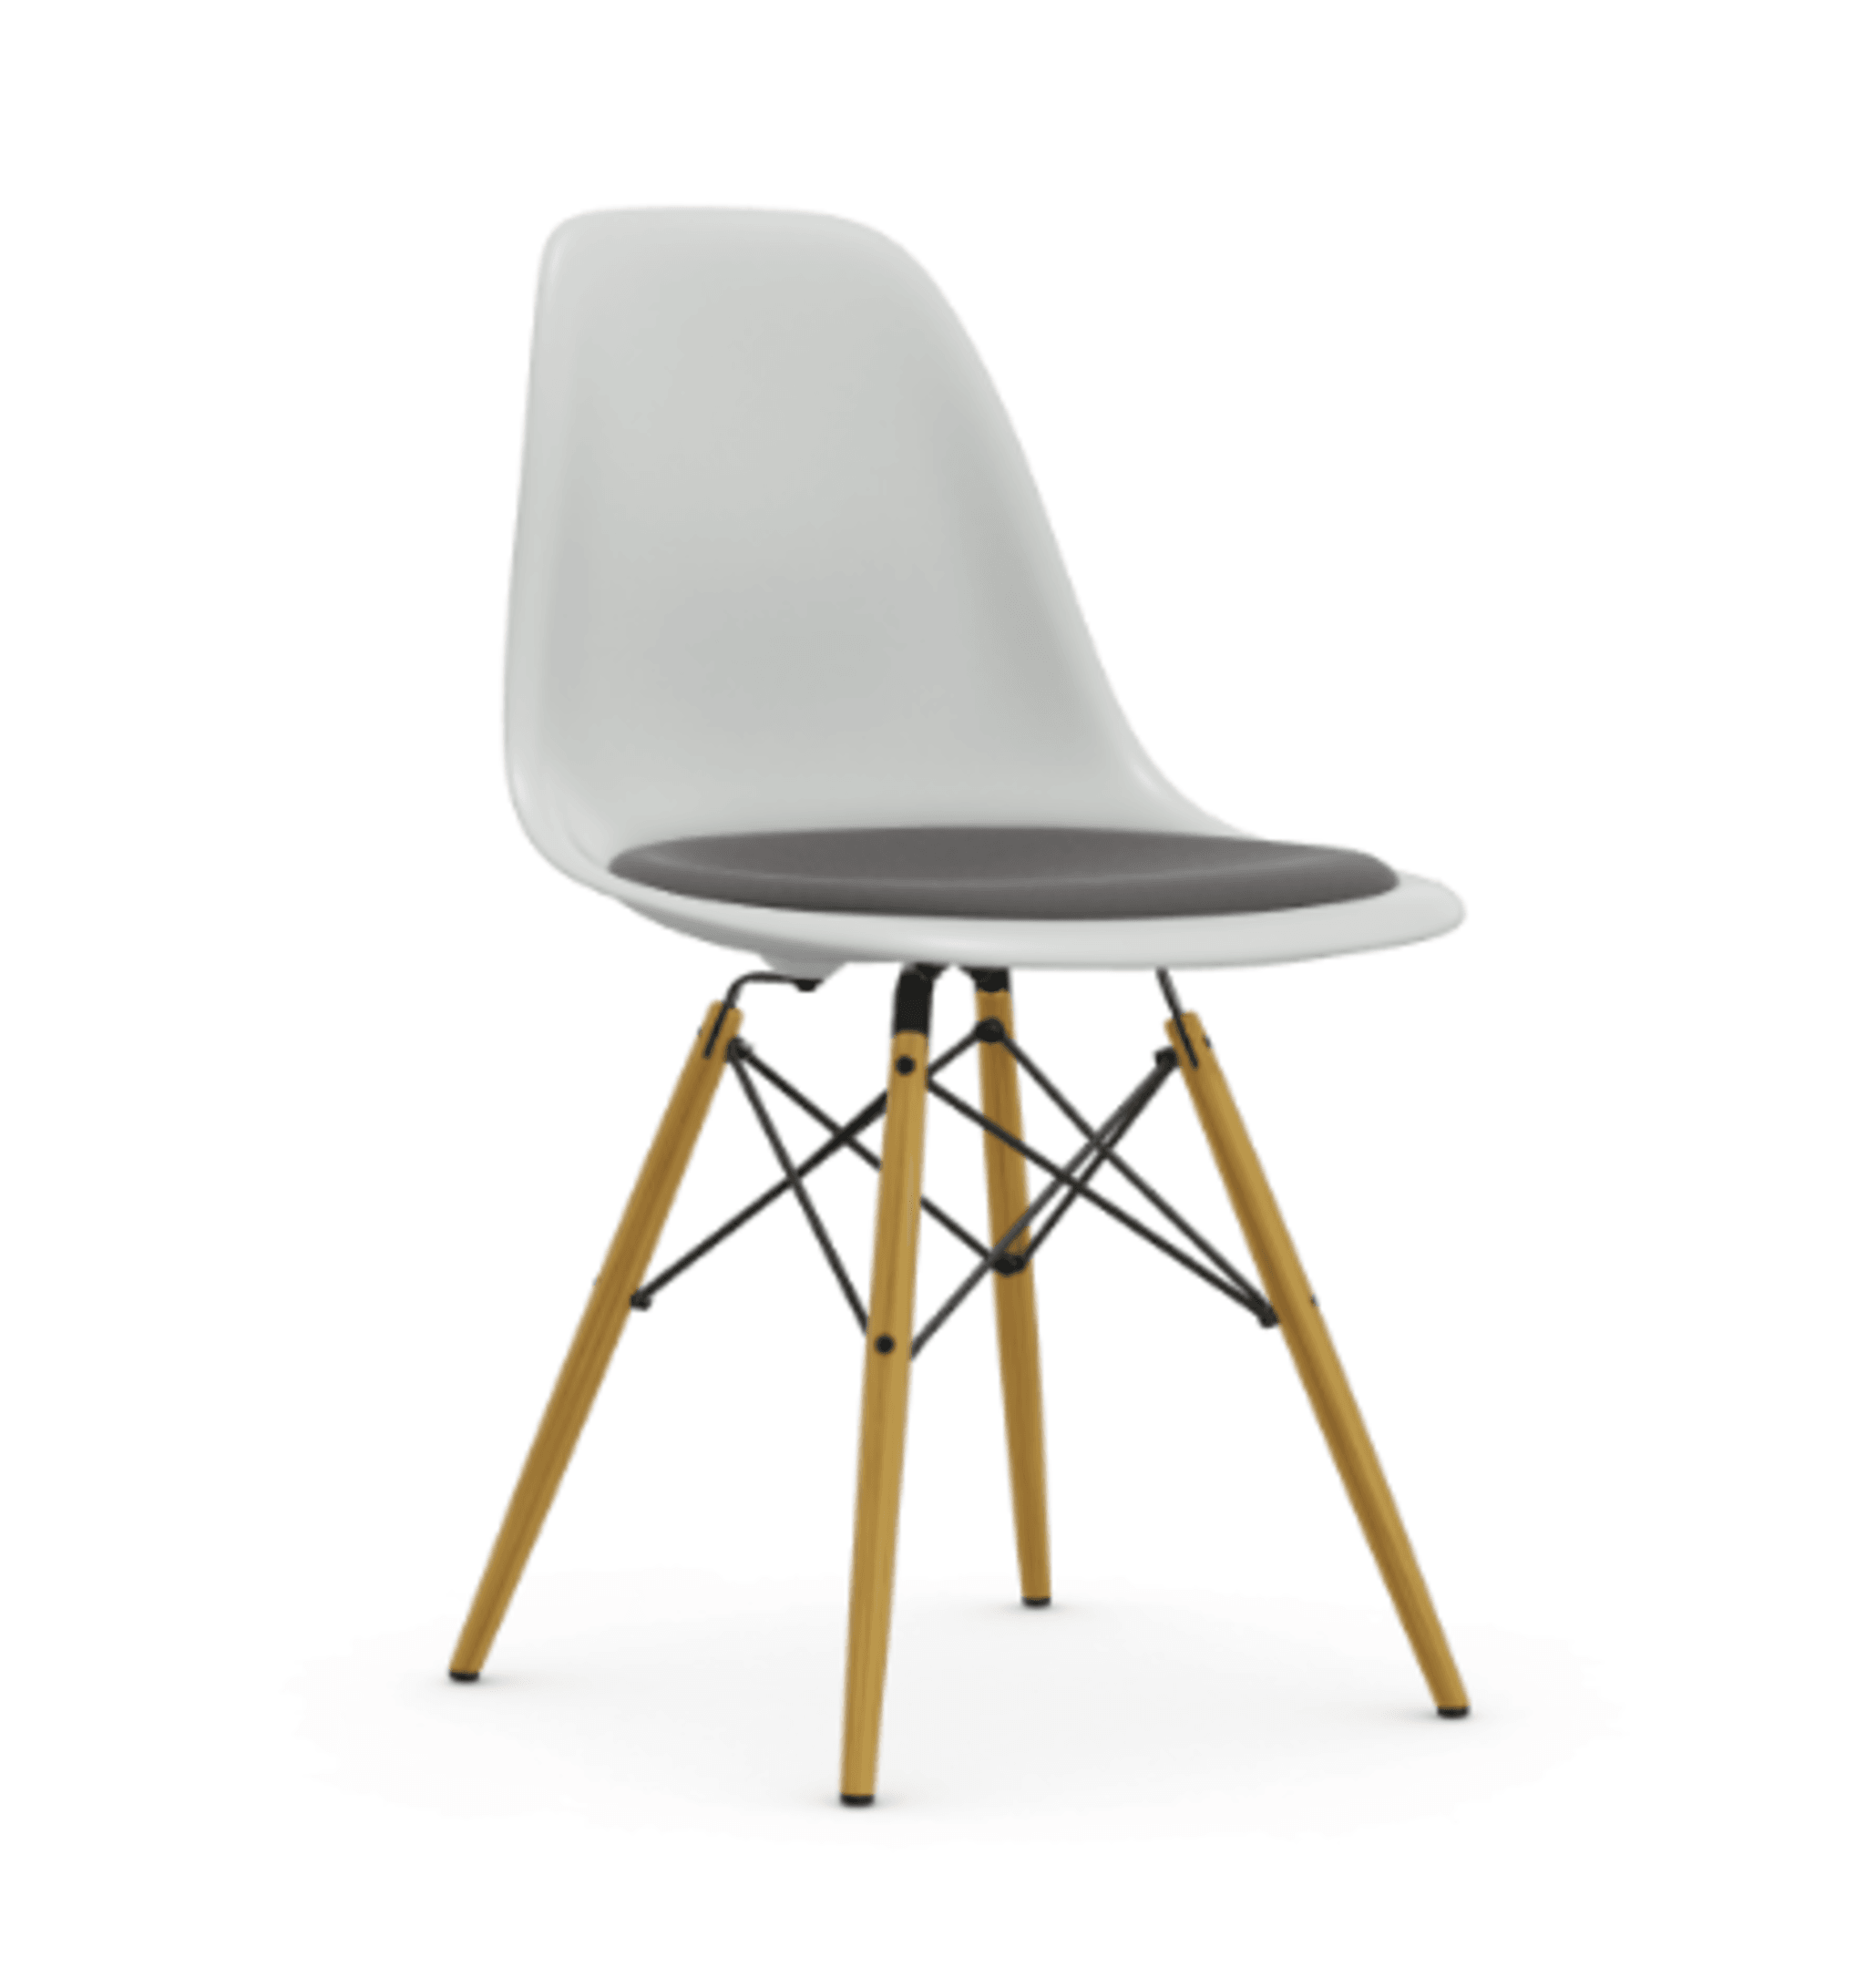 Vitra DSW Eames Plastic Side Chair RE - 85 cotton white RE - Sitzpolster "Hopsak" 05 dunkelgrau--11